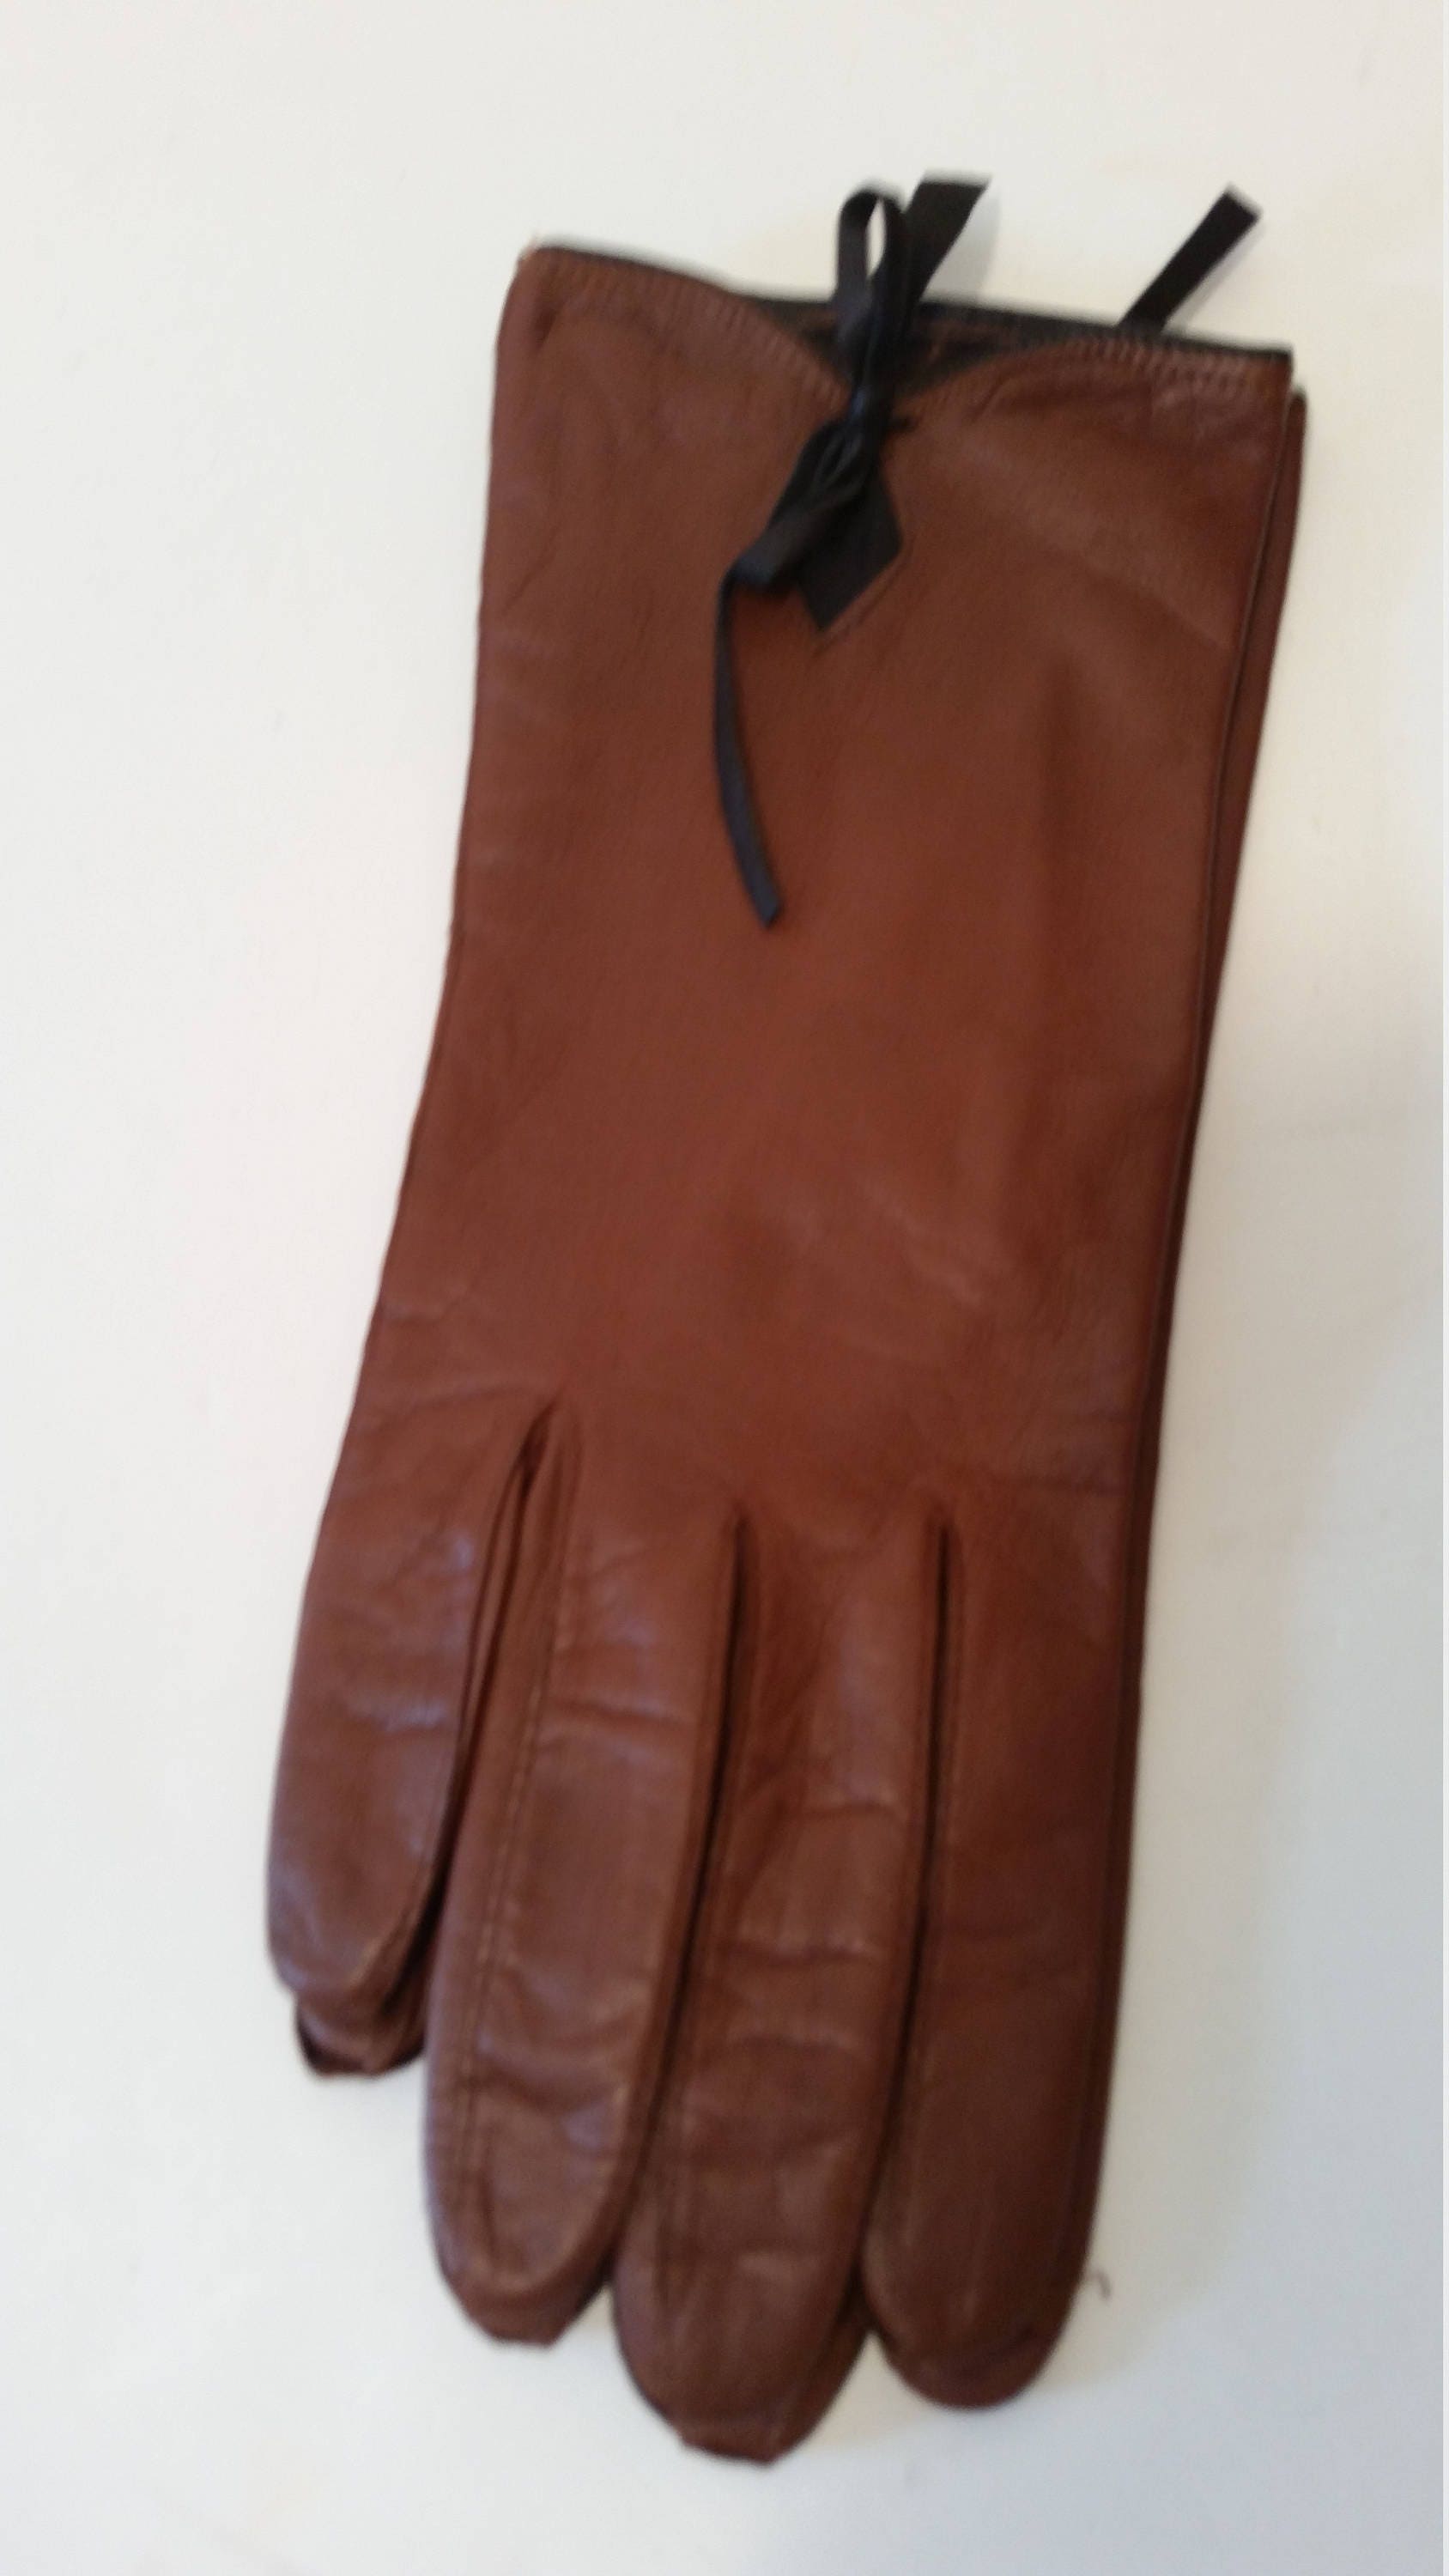 Vintage Gloves Brown Kid Leather Wrist Length Silk Lined Dress